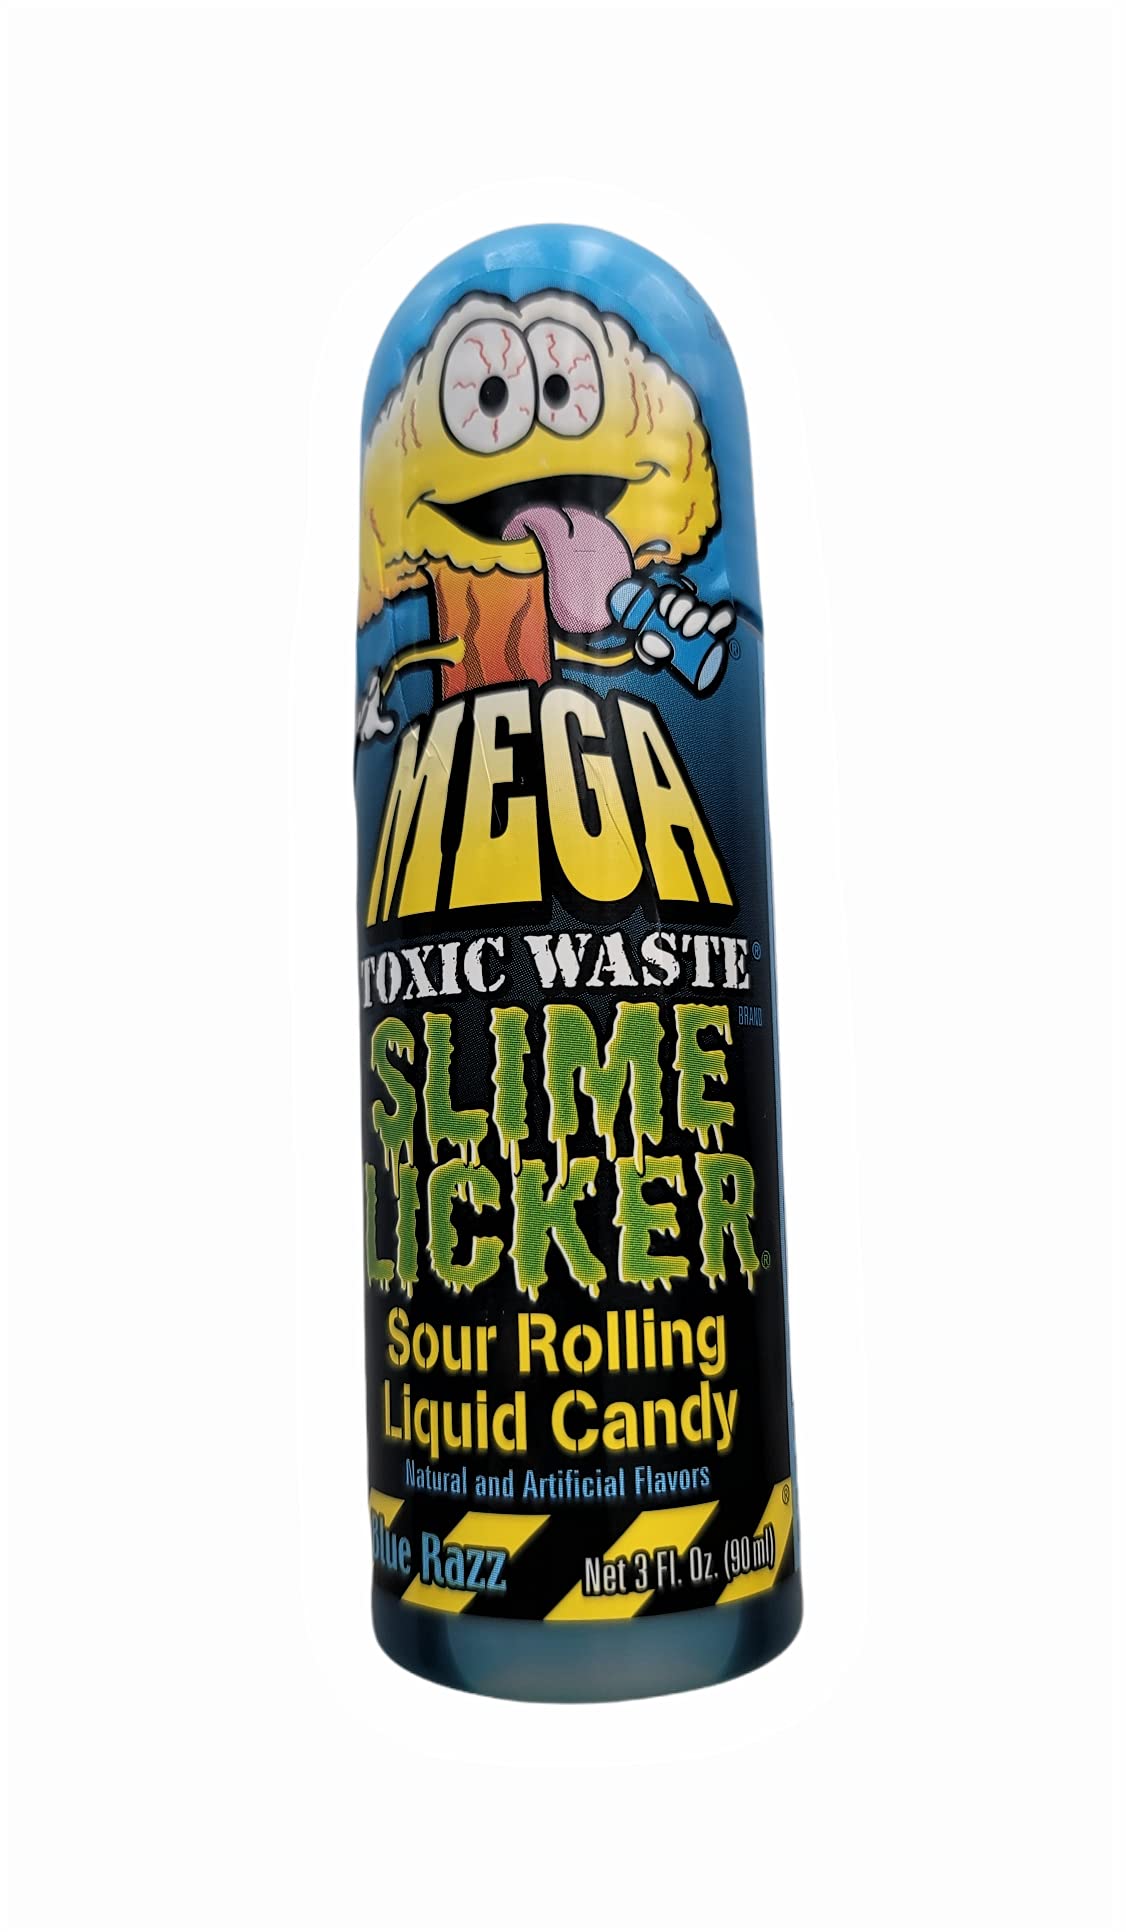 1 Pack Slime Licker Mega Size 3 Oz. - Sour Rolling Liquid Candy - Blue Razz  Flavor TikTok